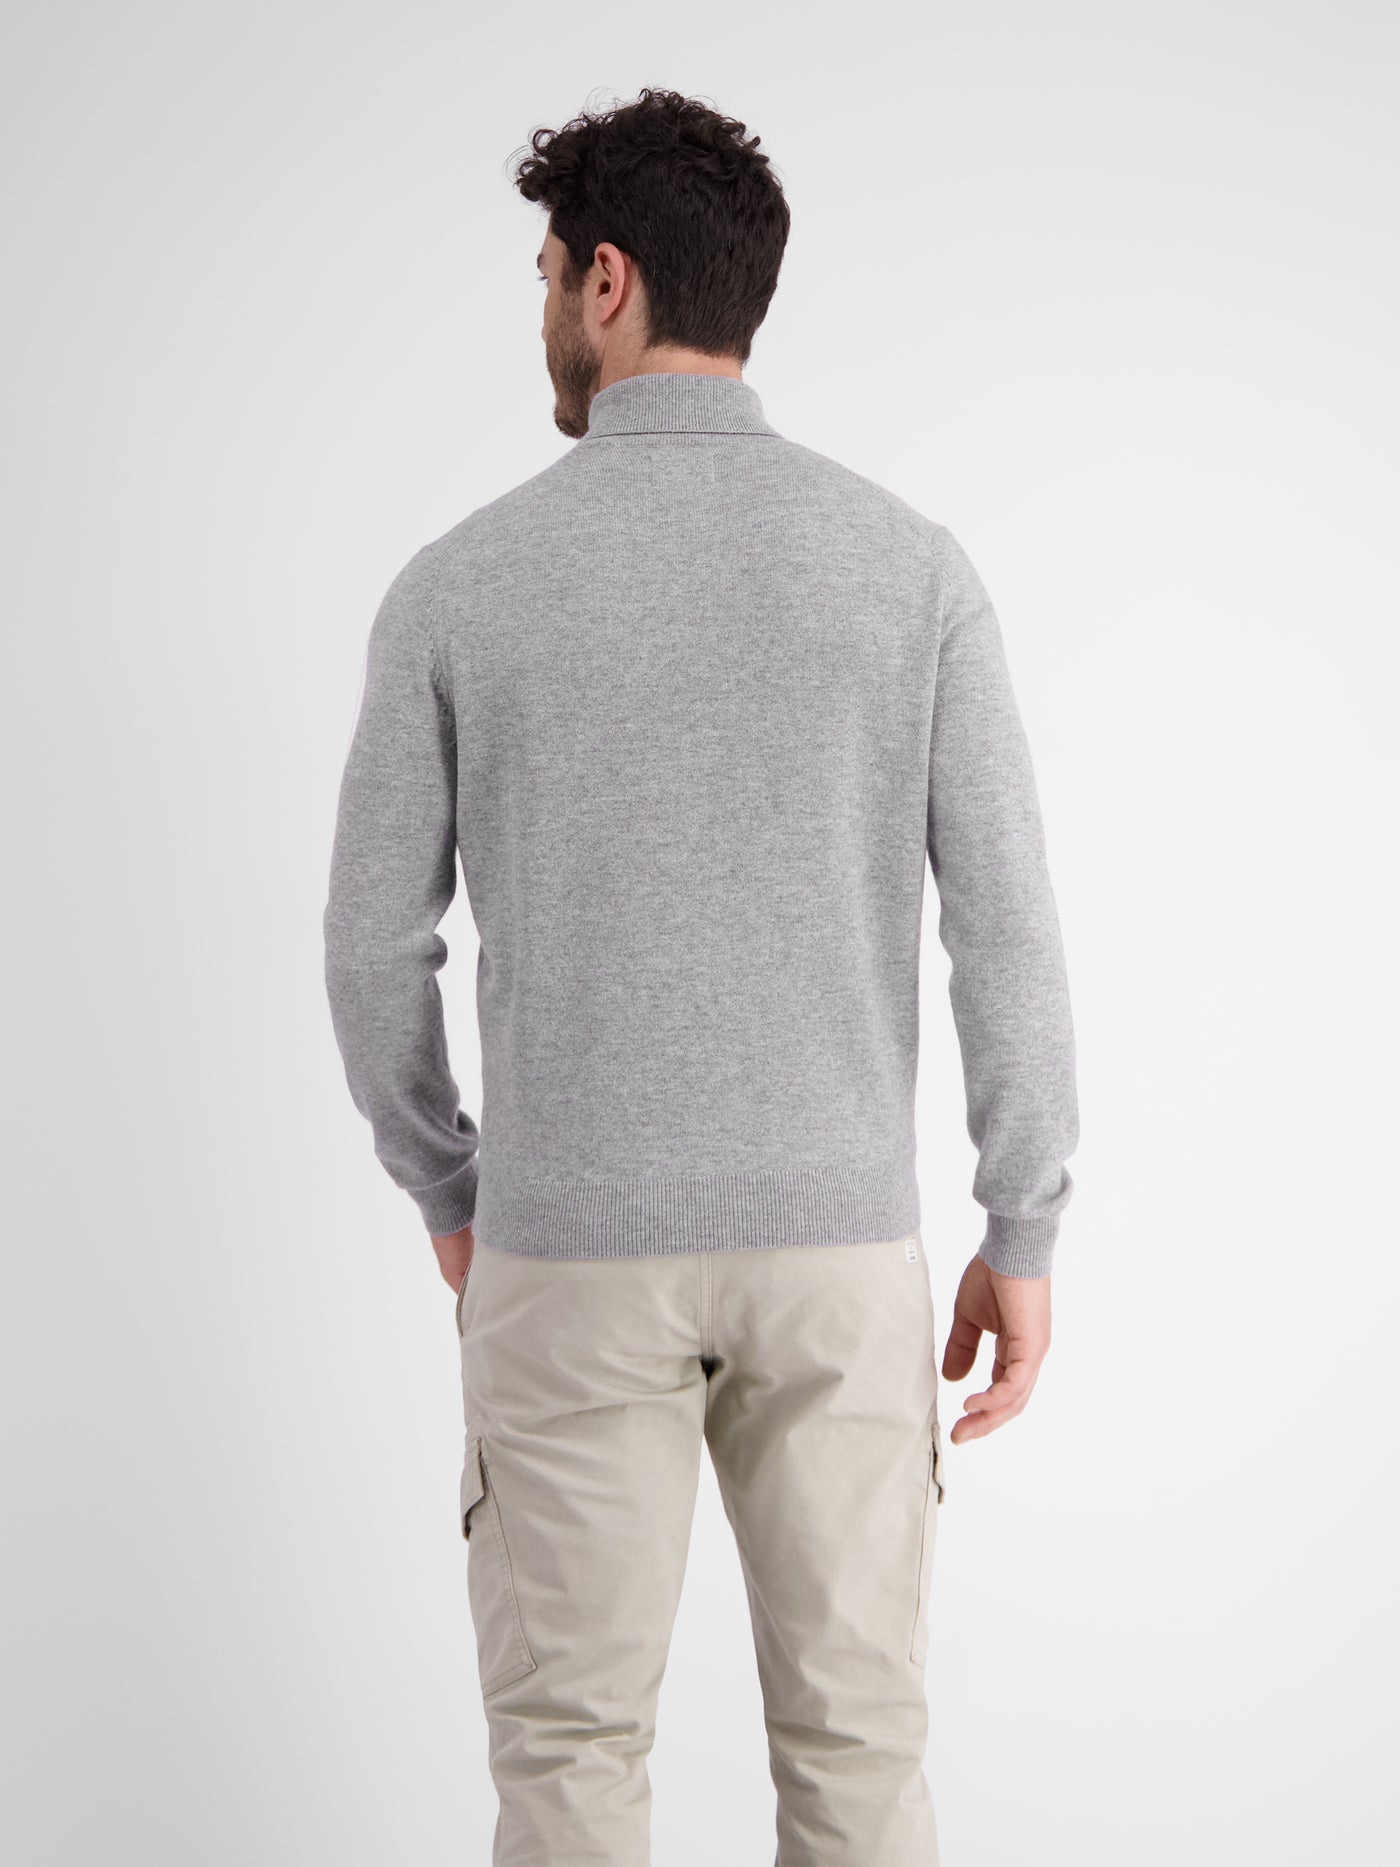 Wool cashmere turtleneck sweater